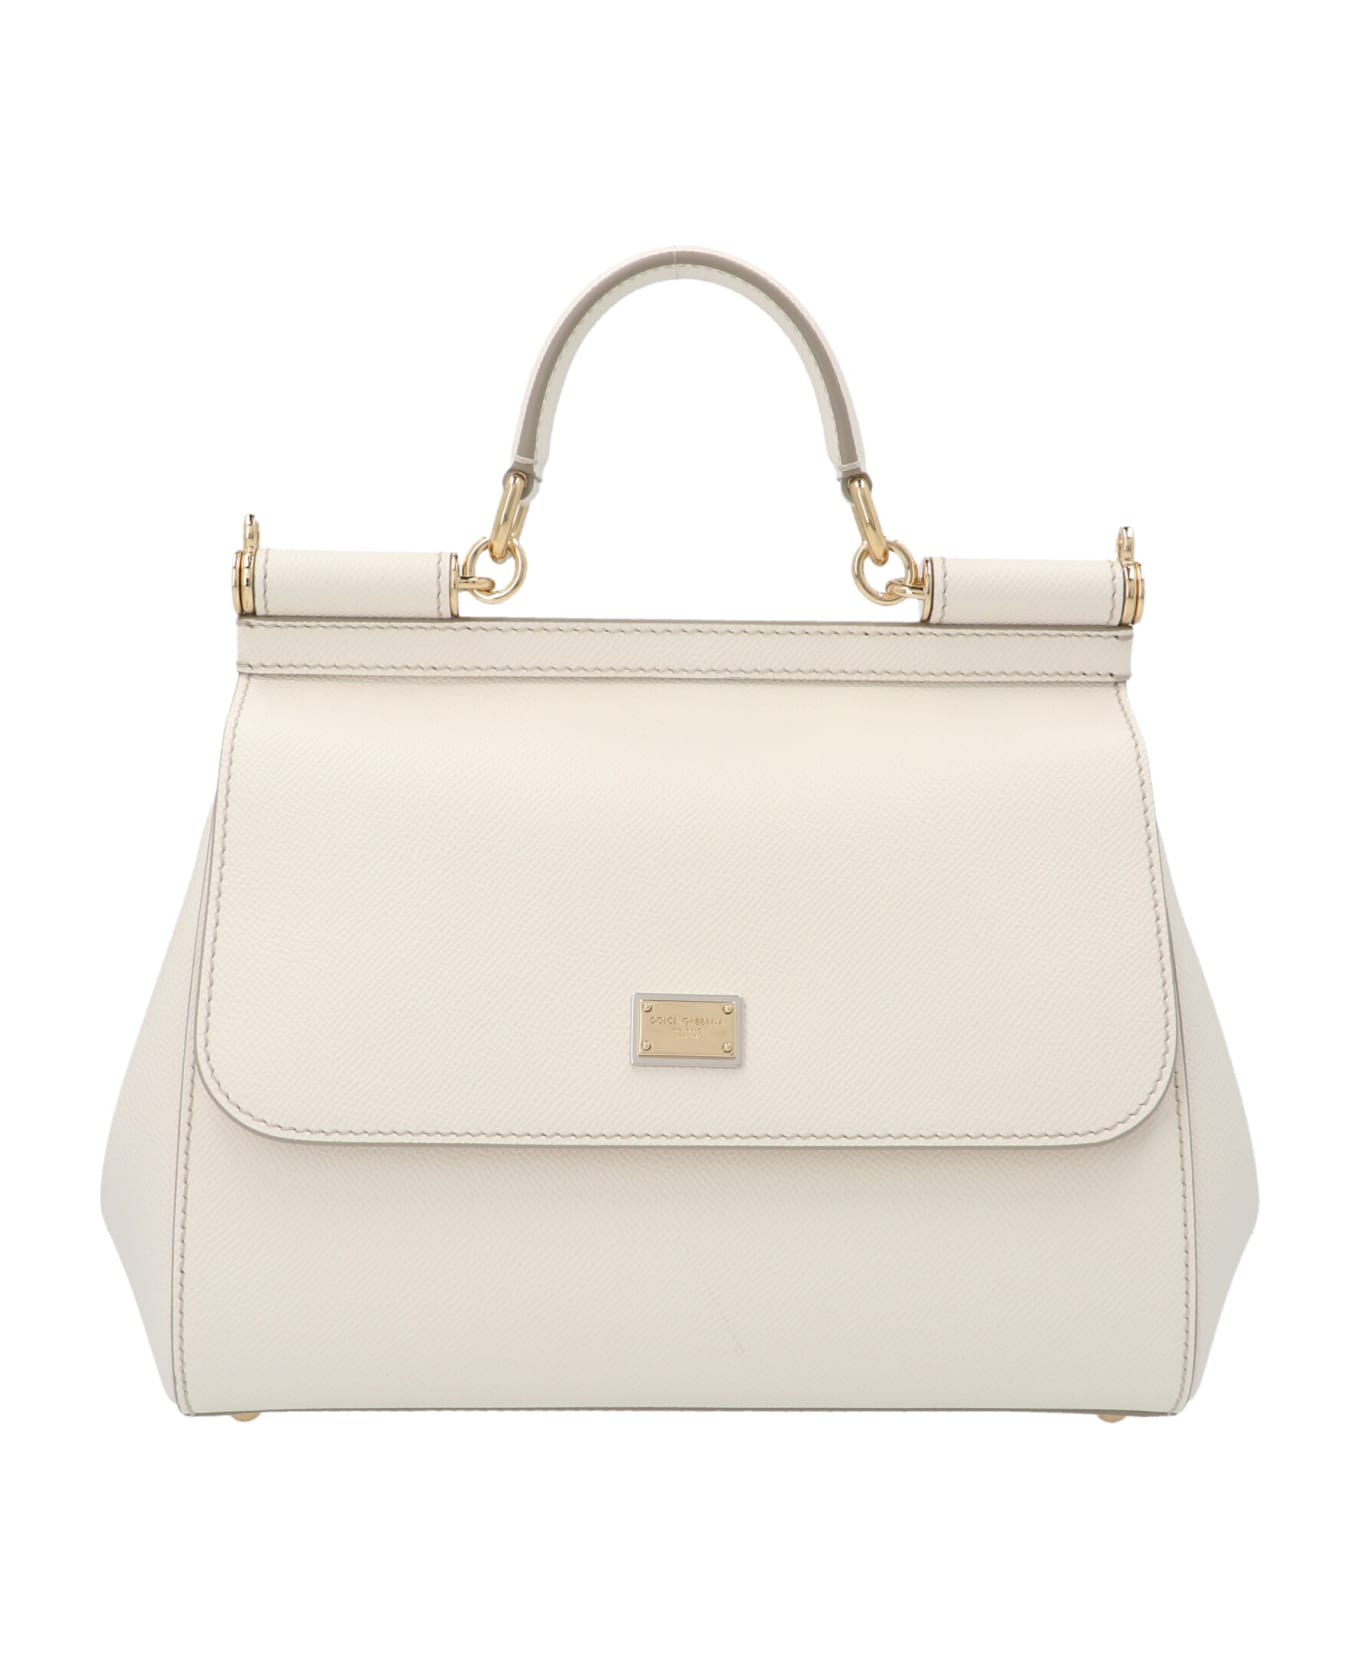 Dolce & Gabbana 'sicily' Handbag - White